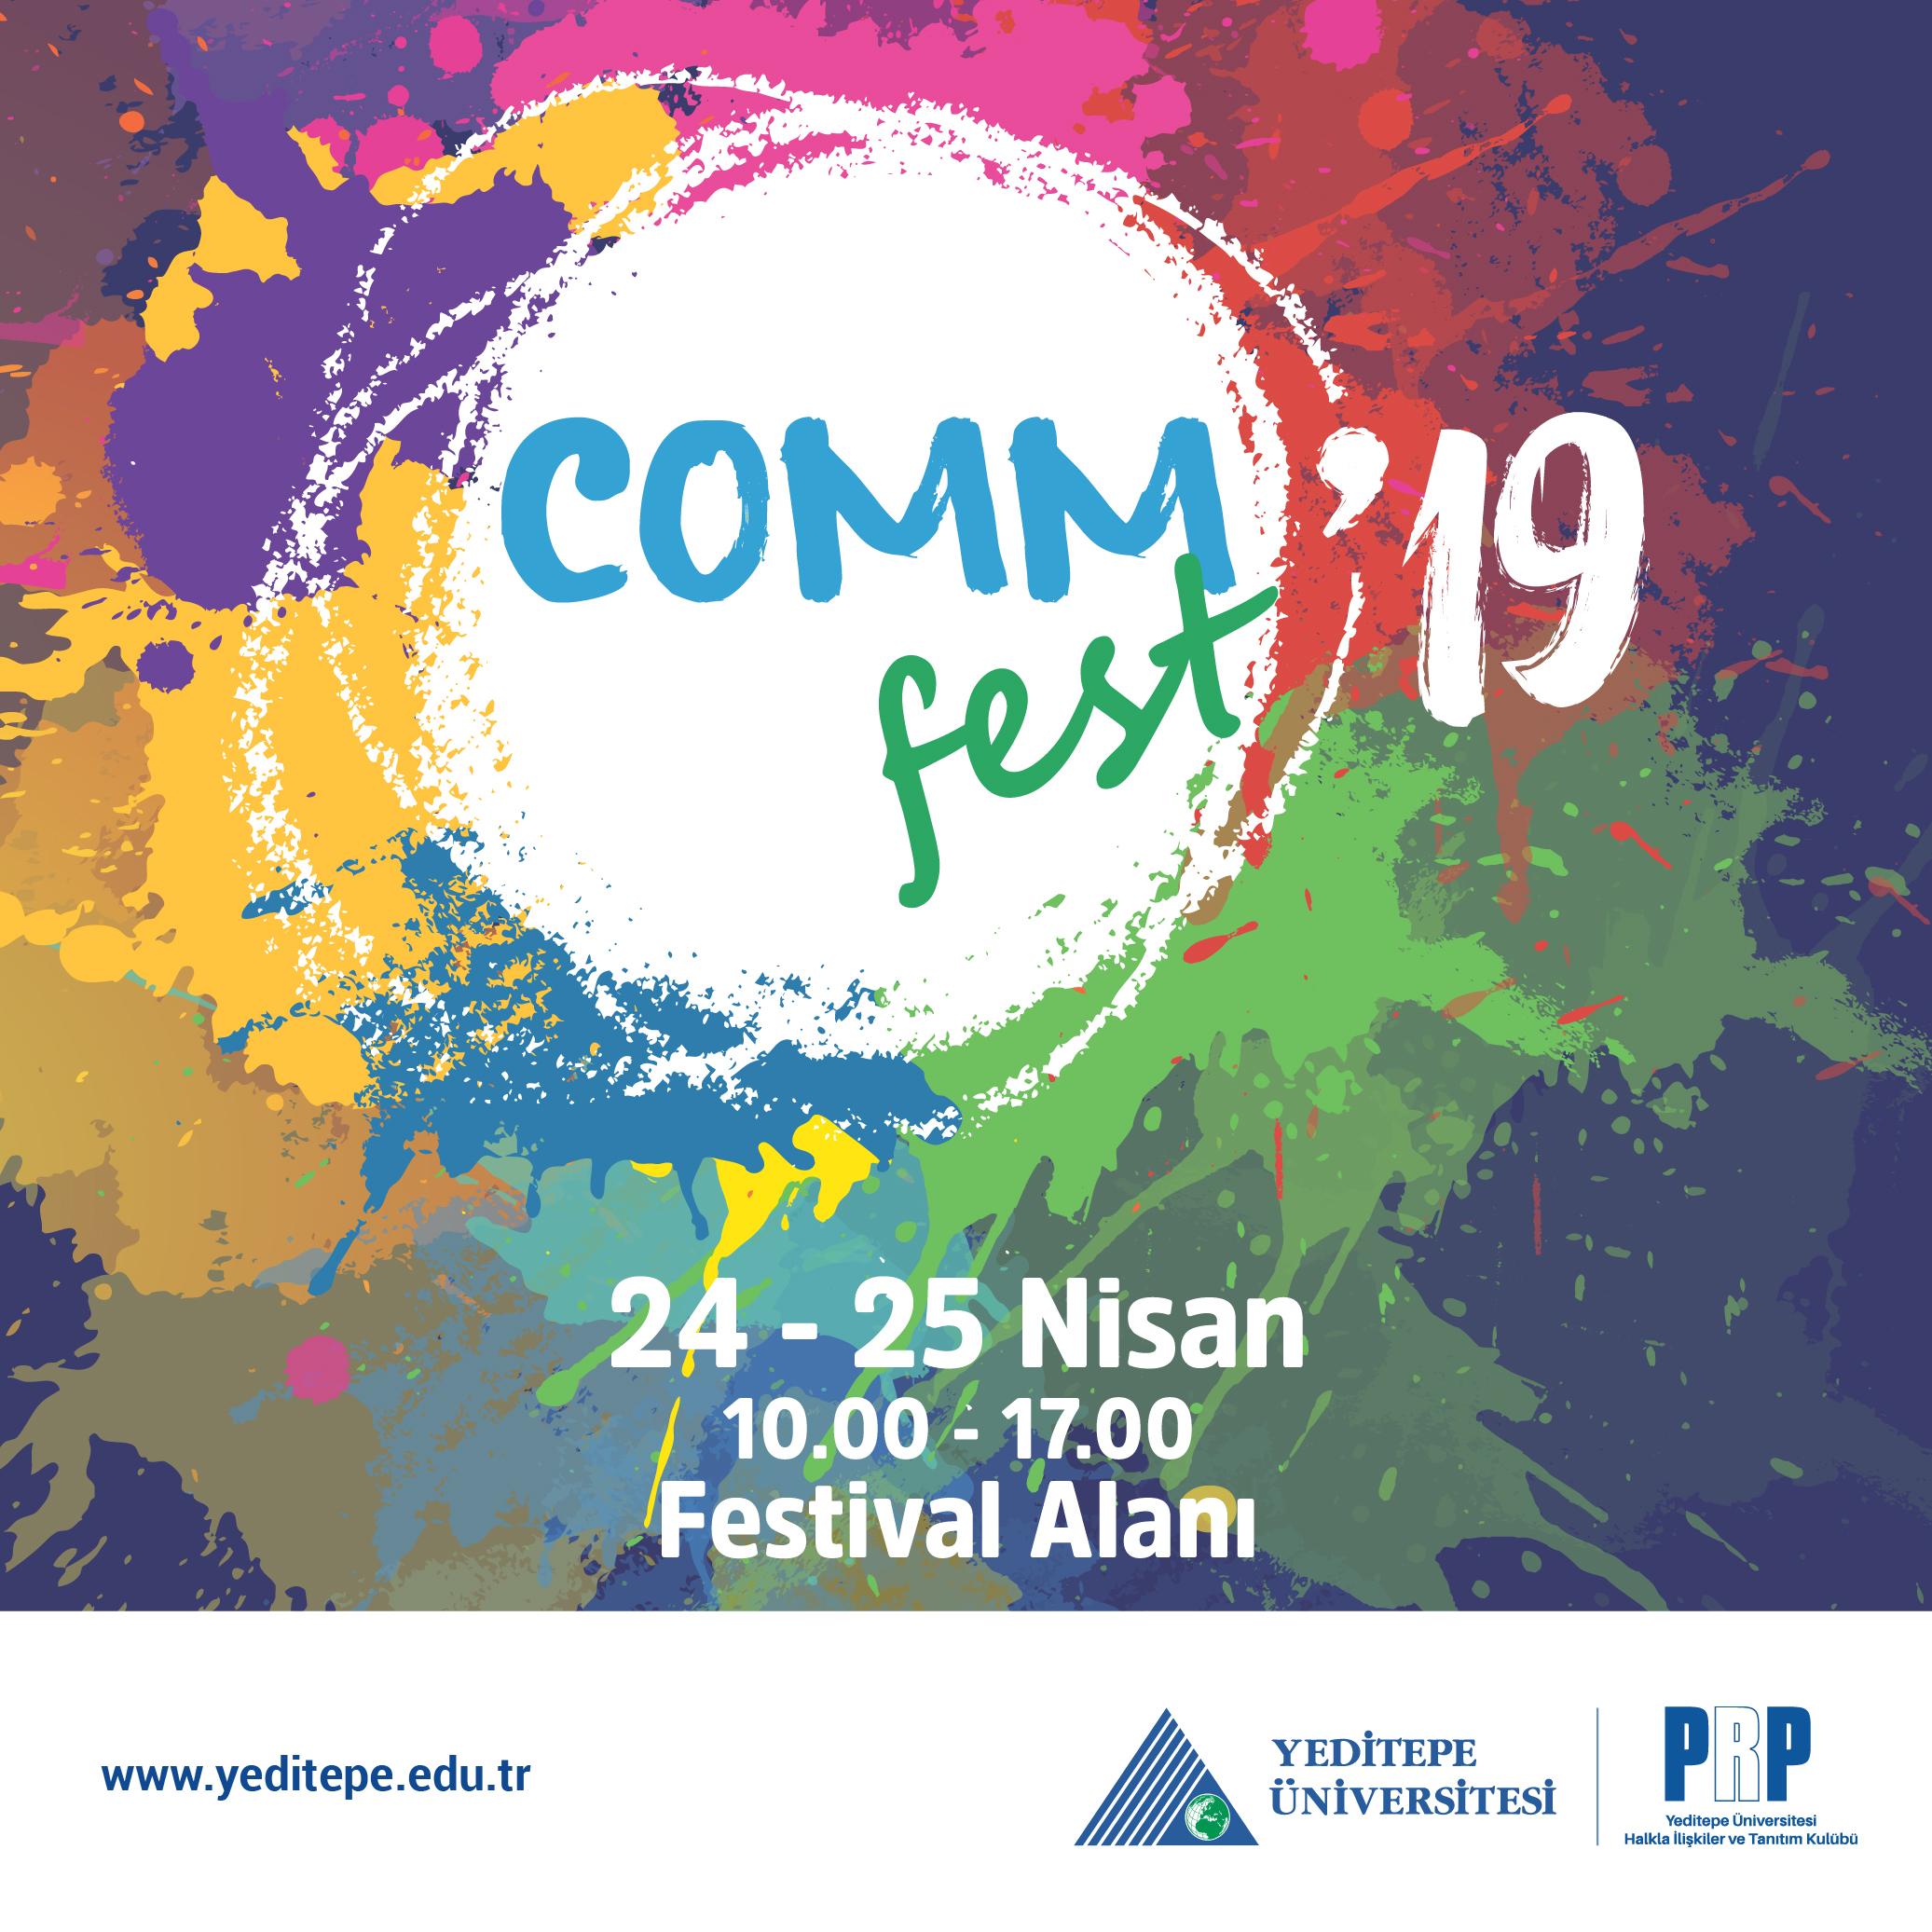 Comm Fest'19